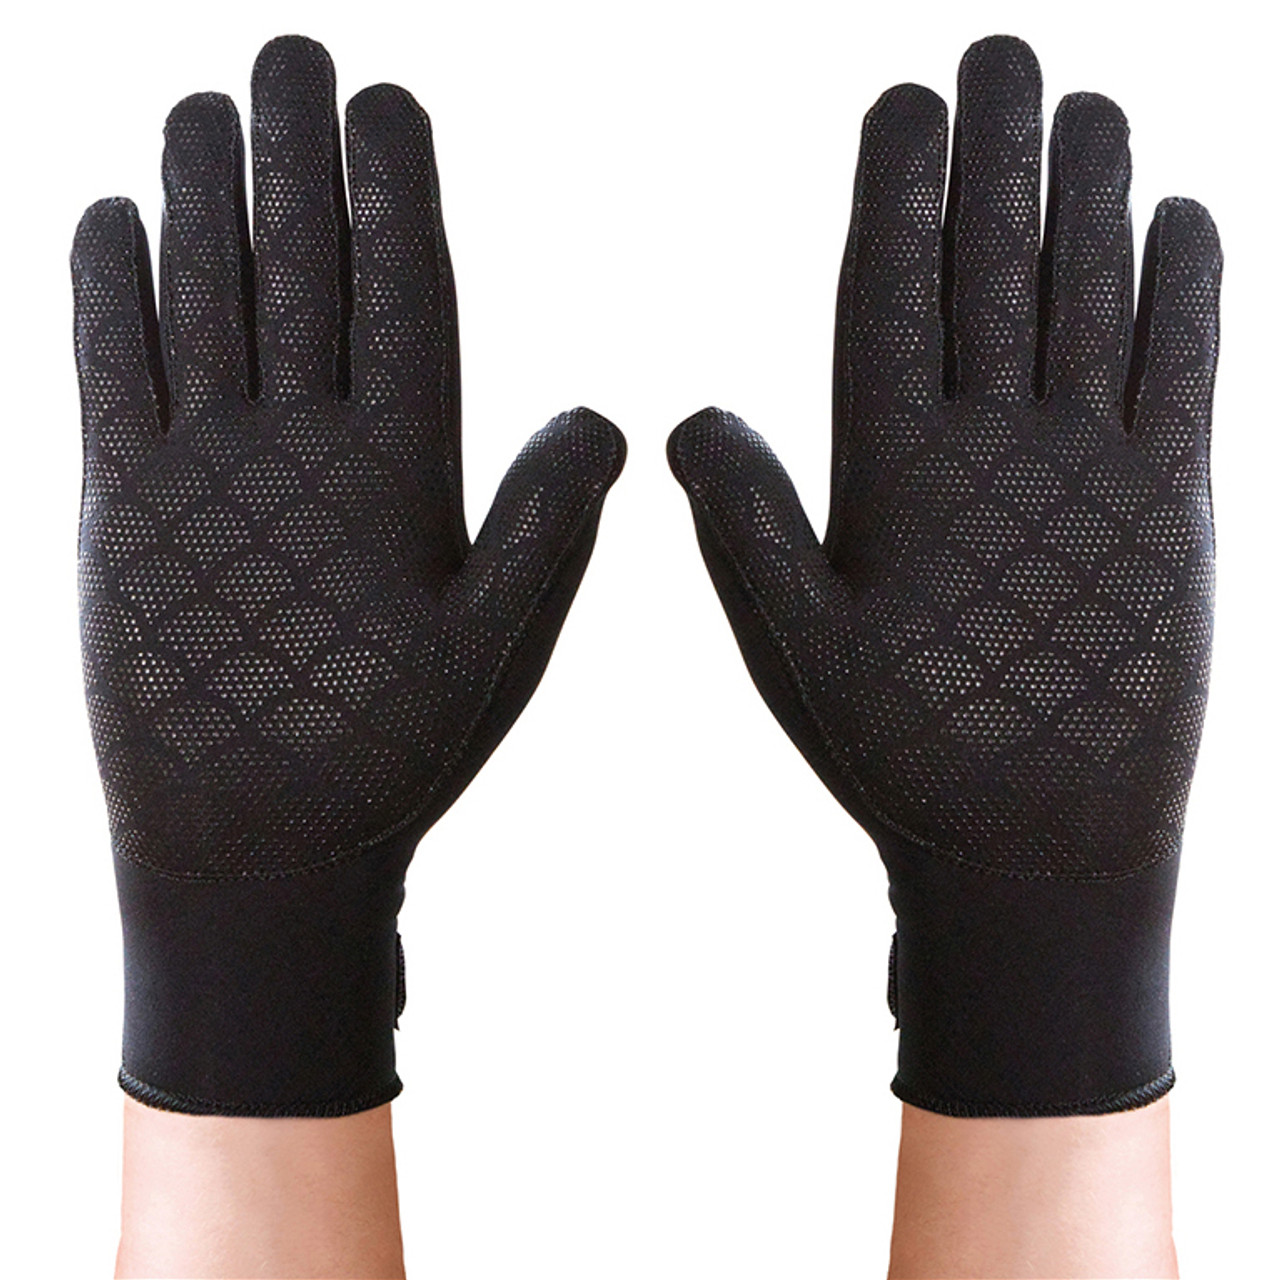 Ortho 5189 Thermoskin Full Finger Arthritic Gloves XLarge